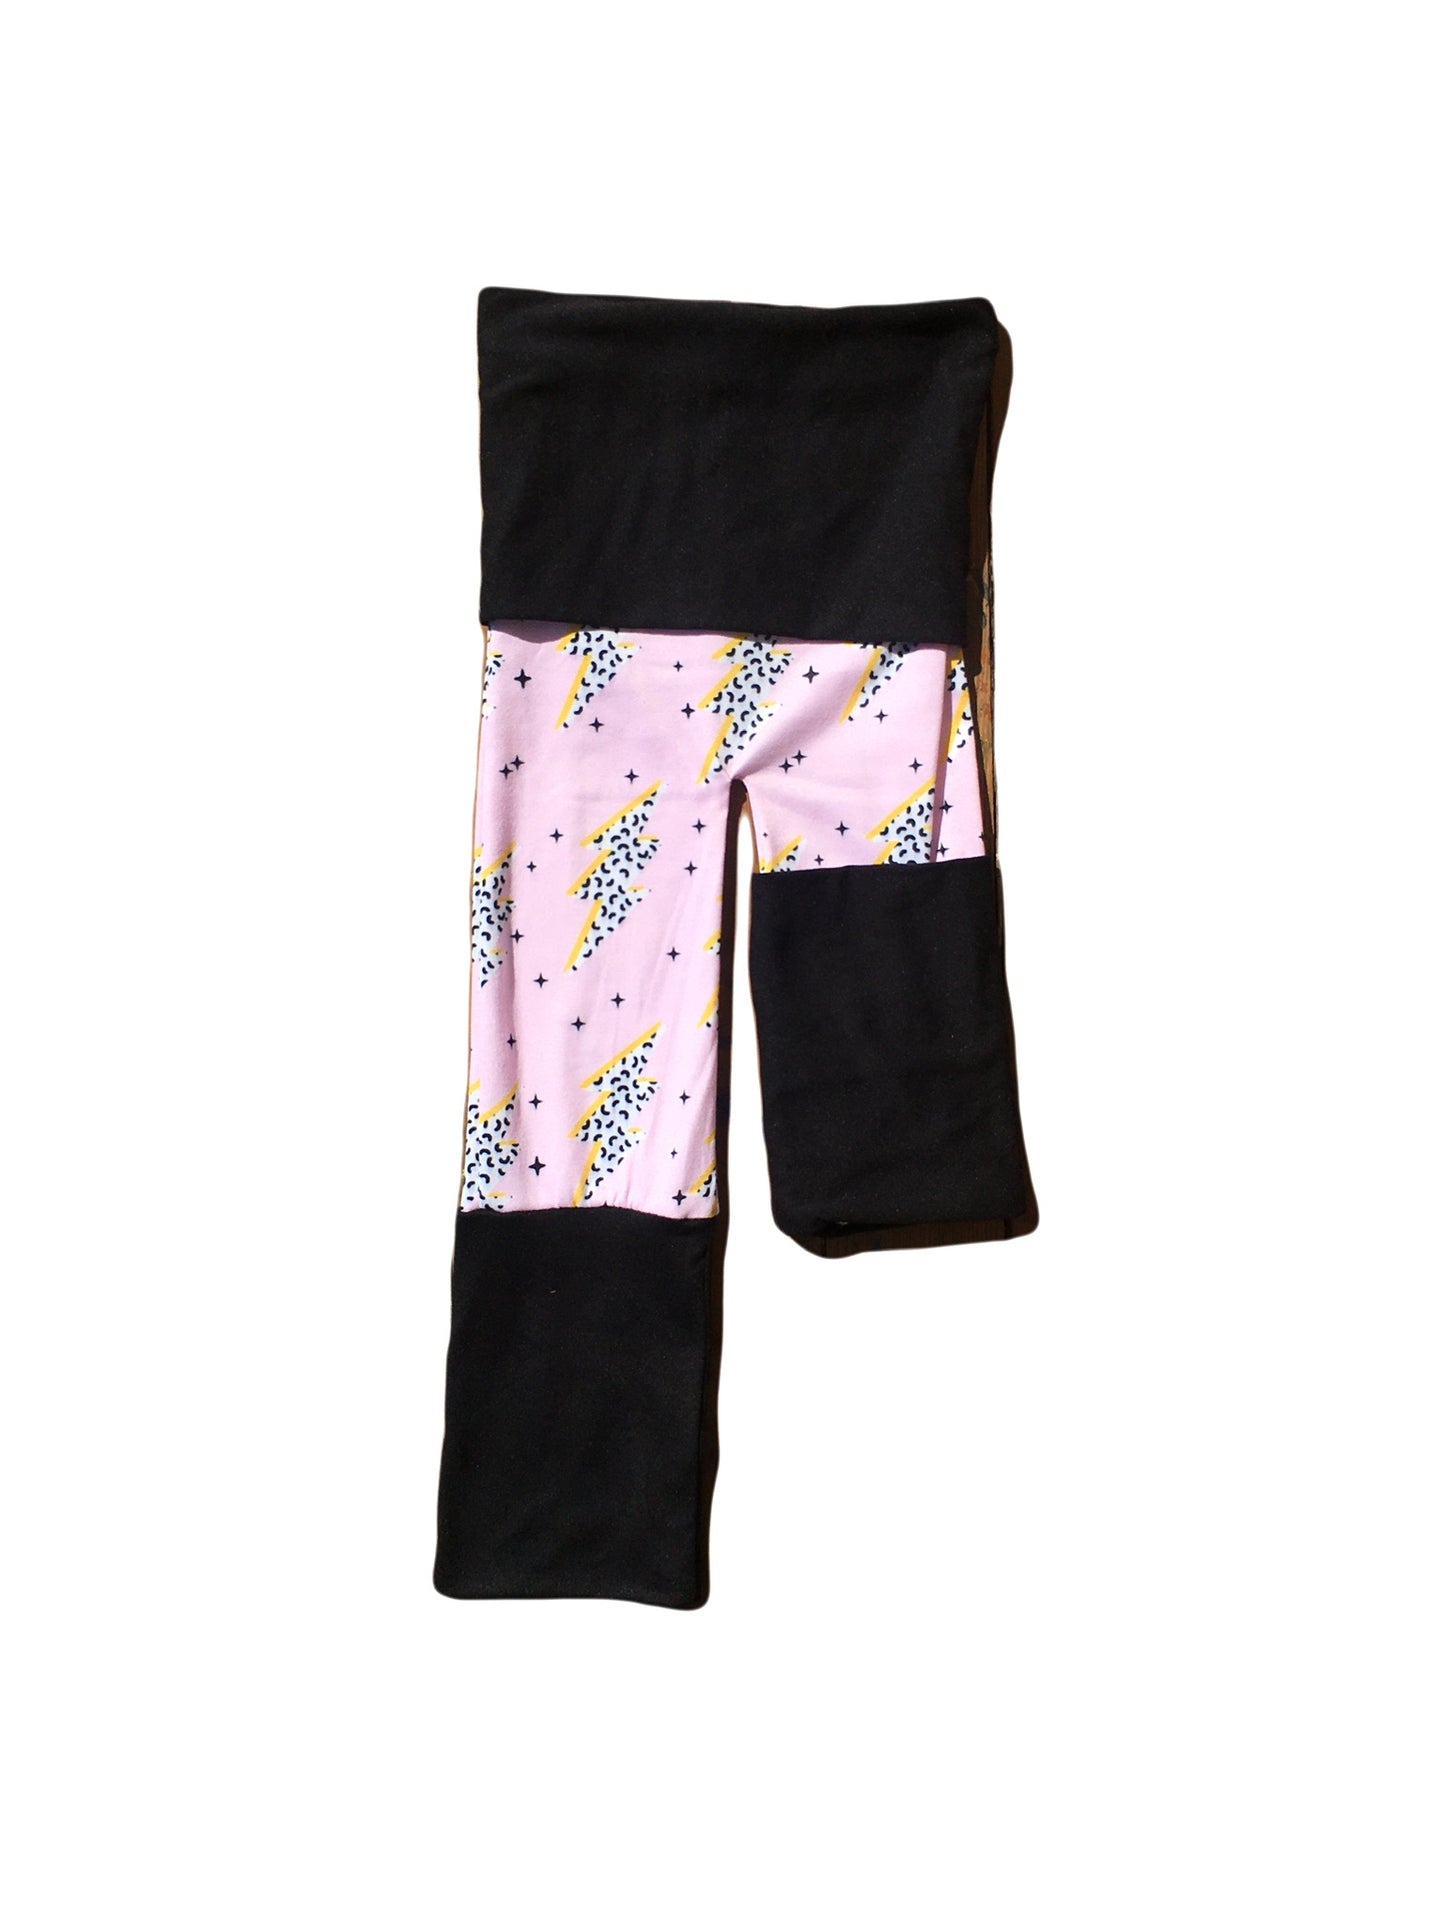 Adjustable Pants - Pink Lightning with Black